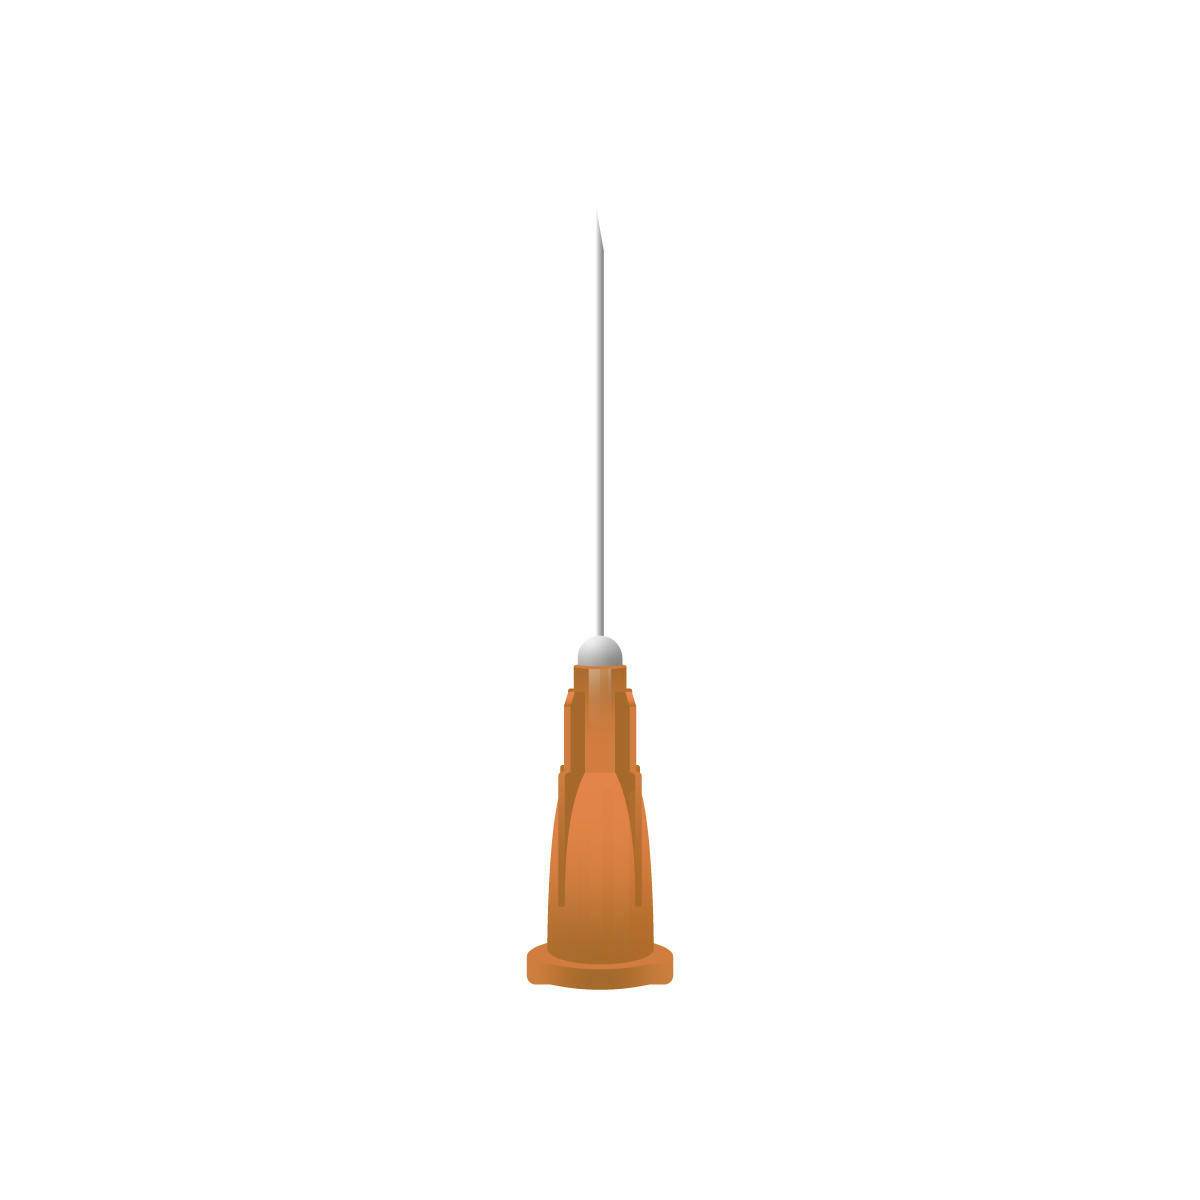 25g Orange 1 inch Terumo Needles